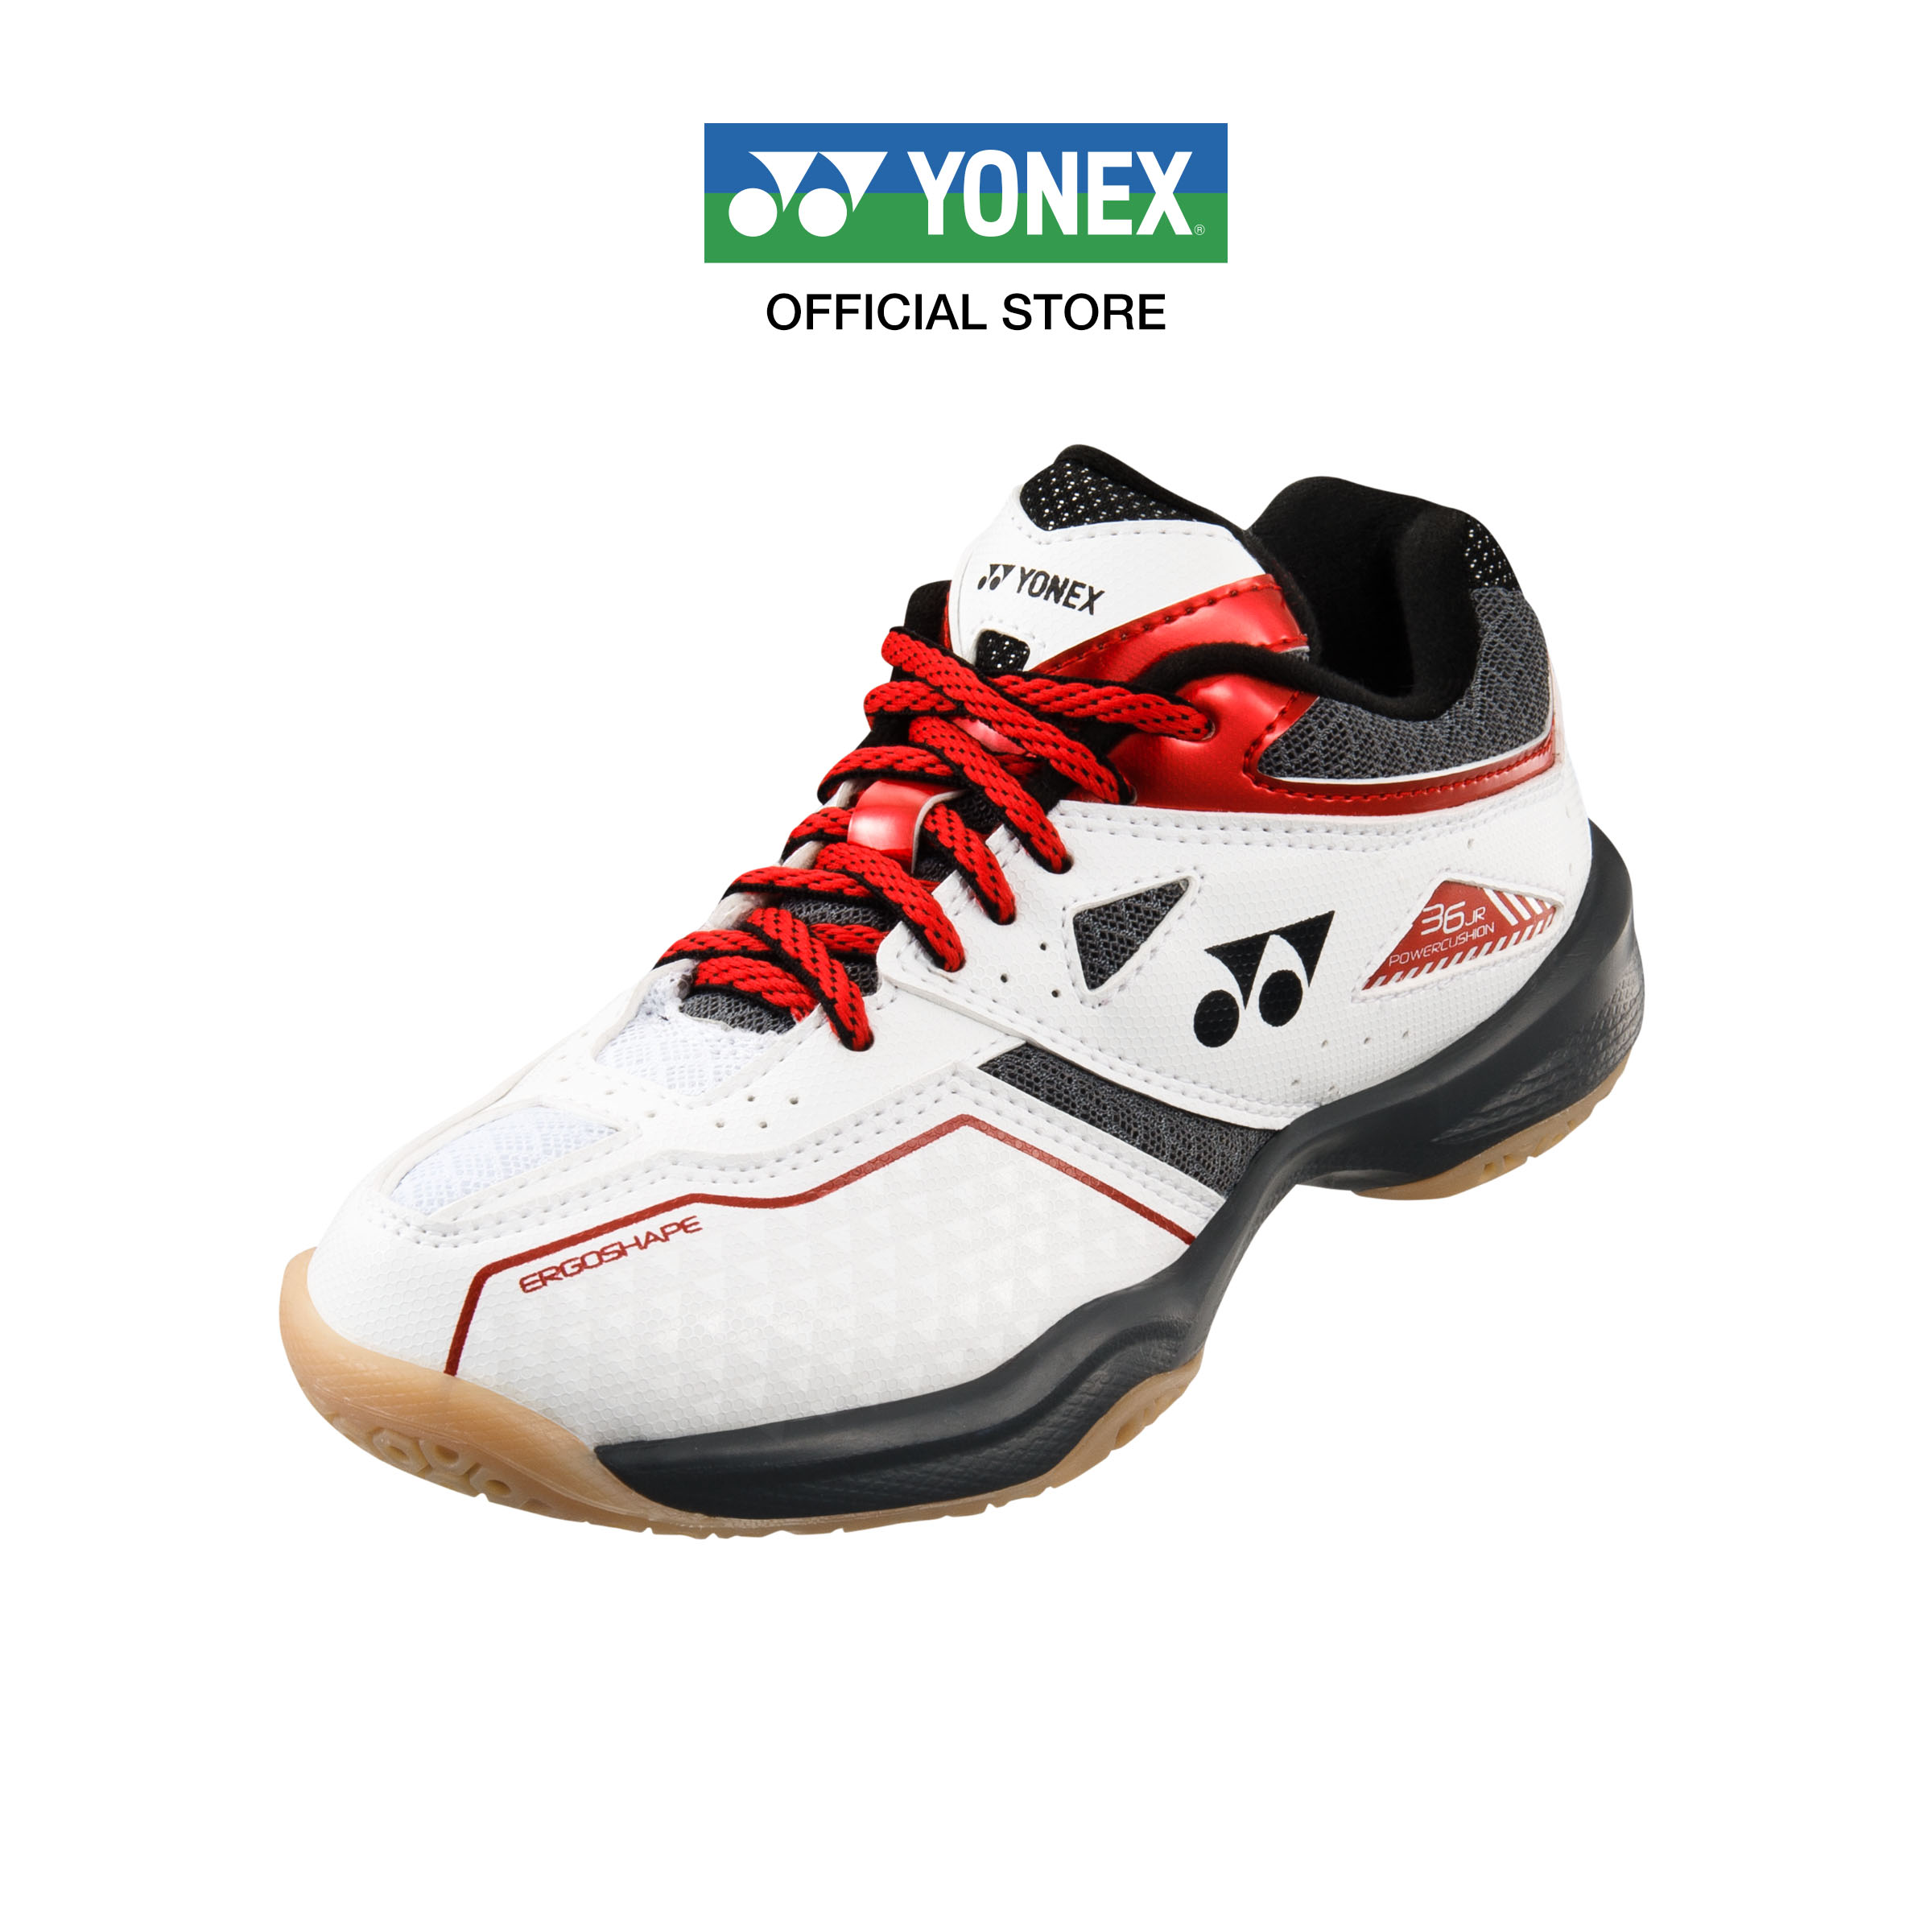 (SIZE US MEN) รองเท้าแบดมินตันเด็ก YONEX รุ่น POWER CUSHION 36 JUNIOR (SHB36JR) รองเท้าสำหรับเด็กผู้เริ่มต้นเล่นแบดมินตัน มีคุณสมบัติที่ช่วยรองรับแรงกระแทก